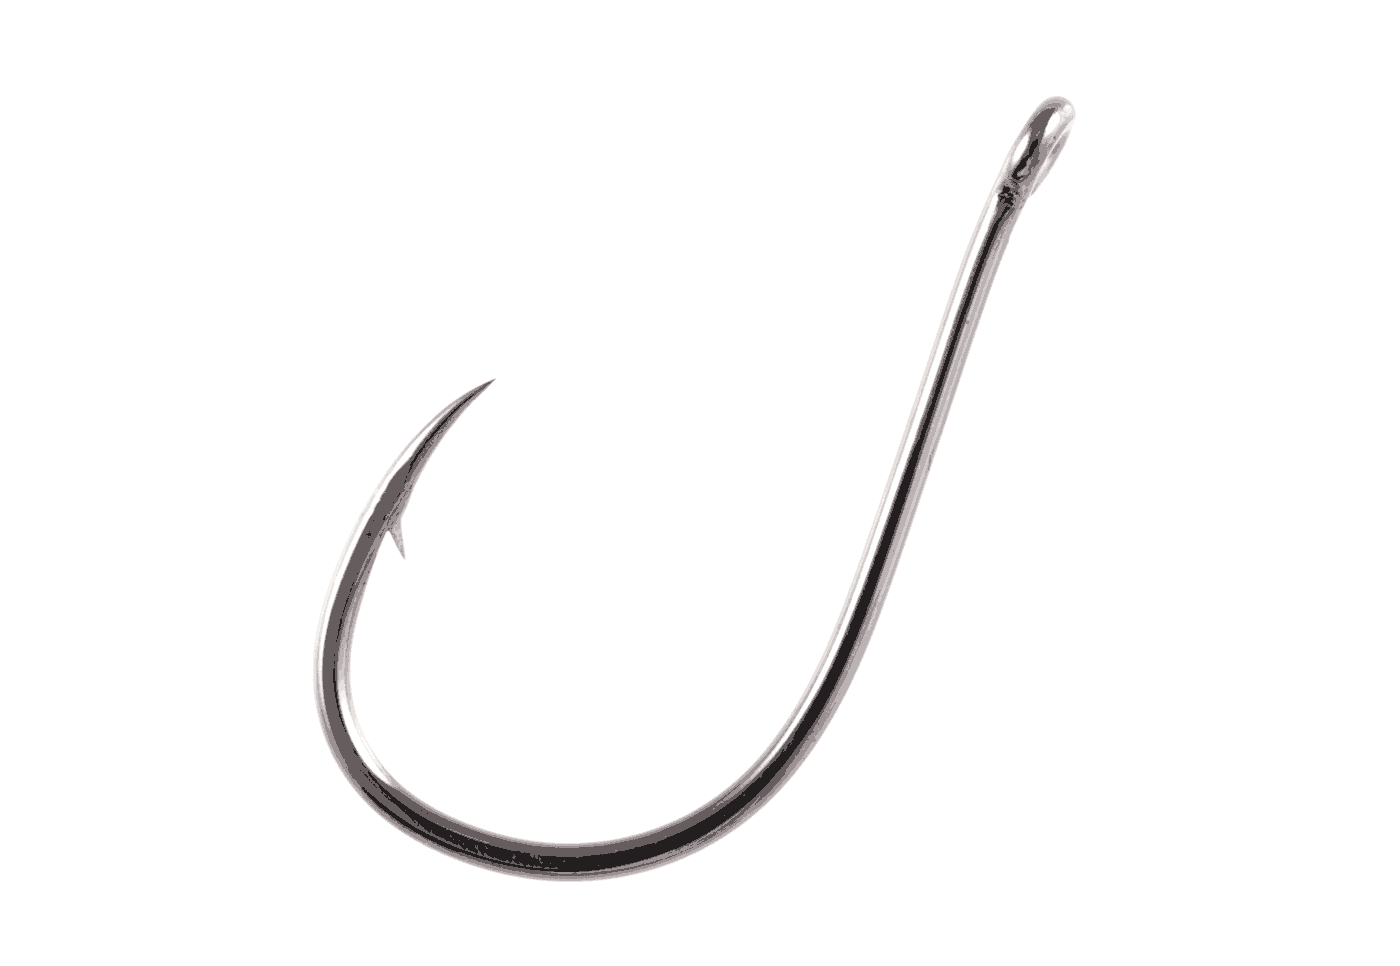 OWNER Mosquito Bait Hooks 5177-071 Size 4 - 10 pack Black Chrome Super  Needle